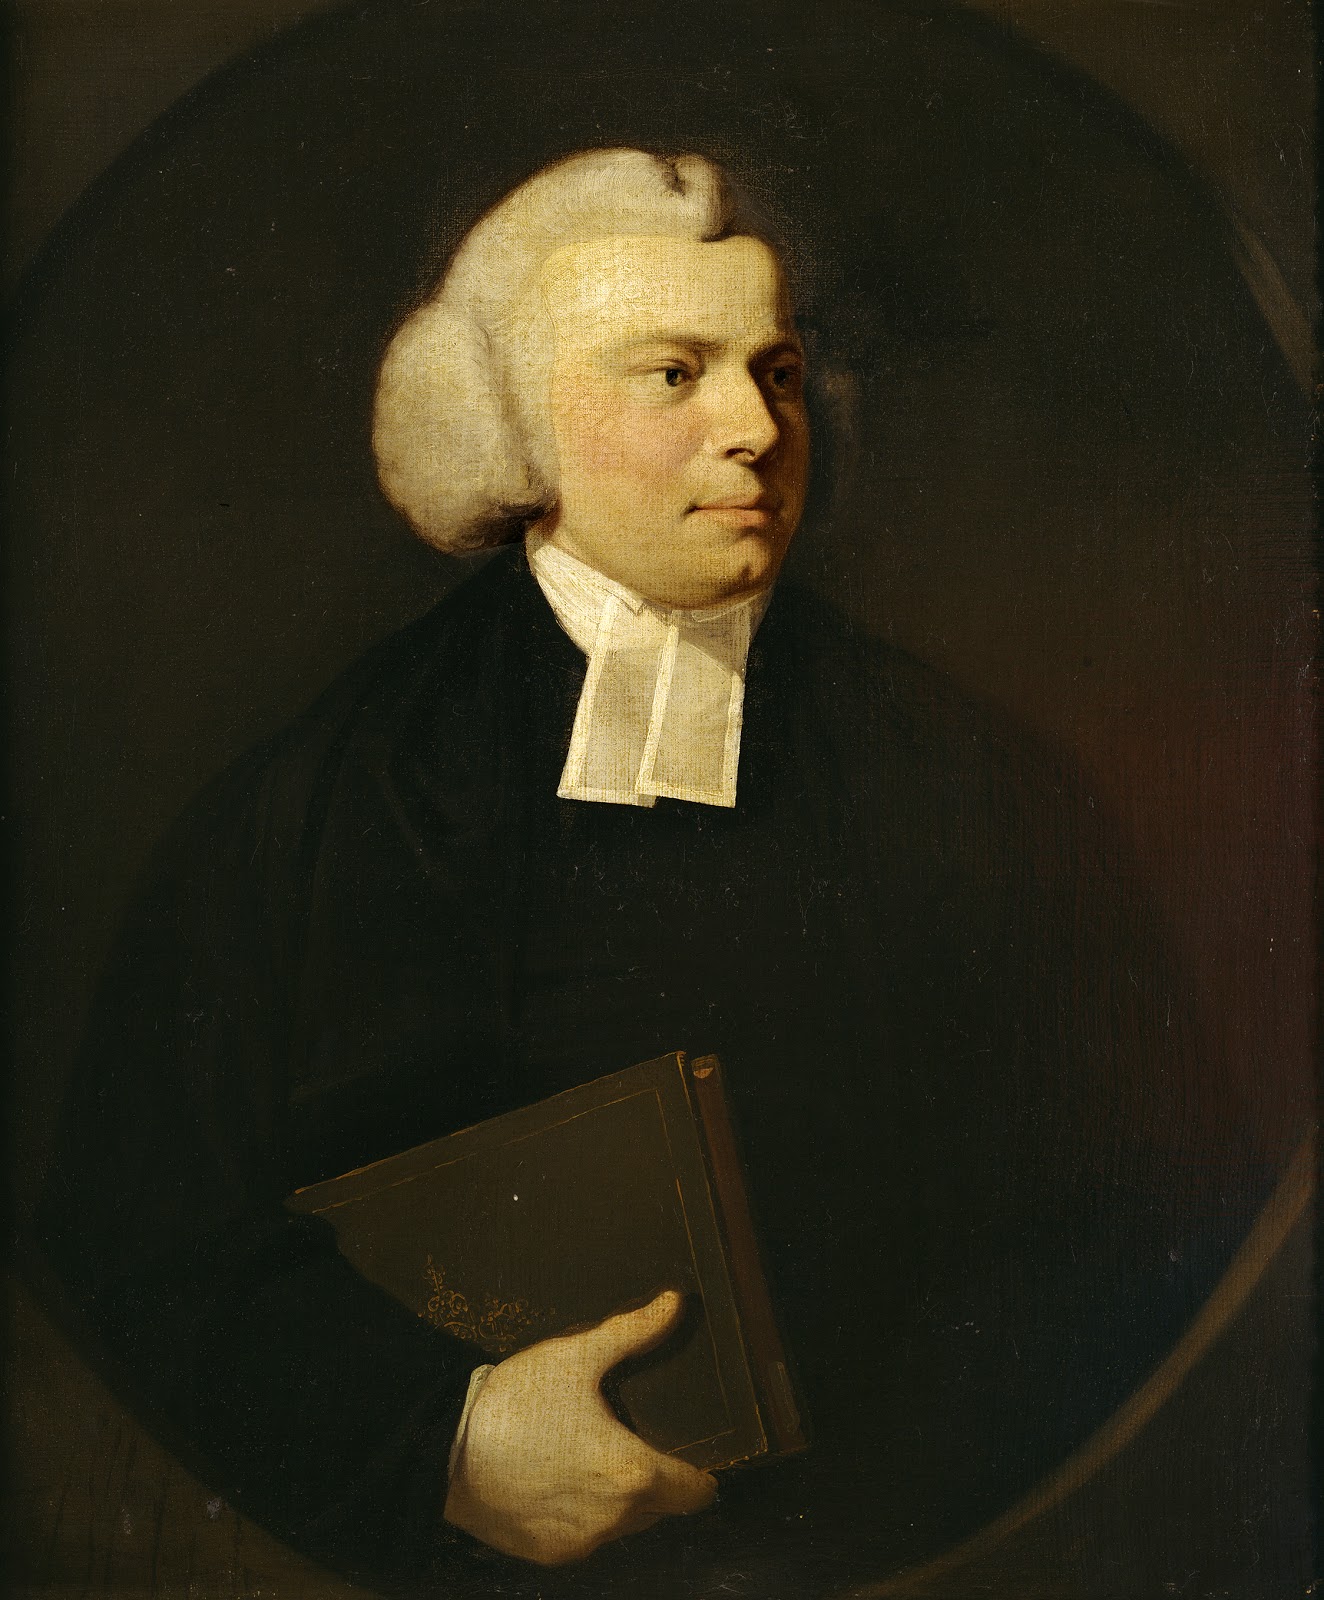 Joshua+Reynolds-1723-1792 (122).jpg